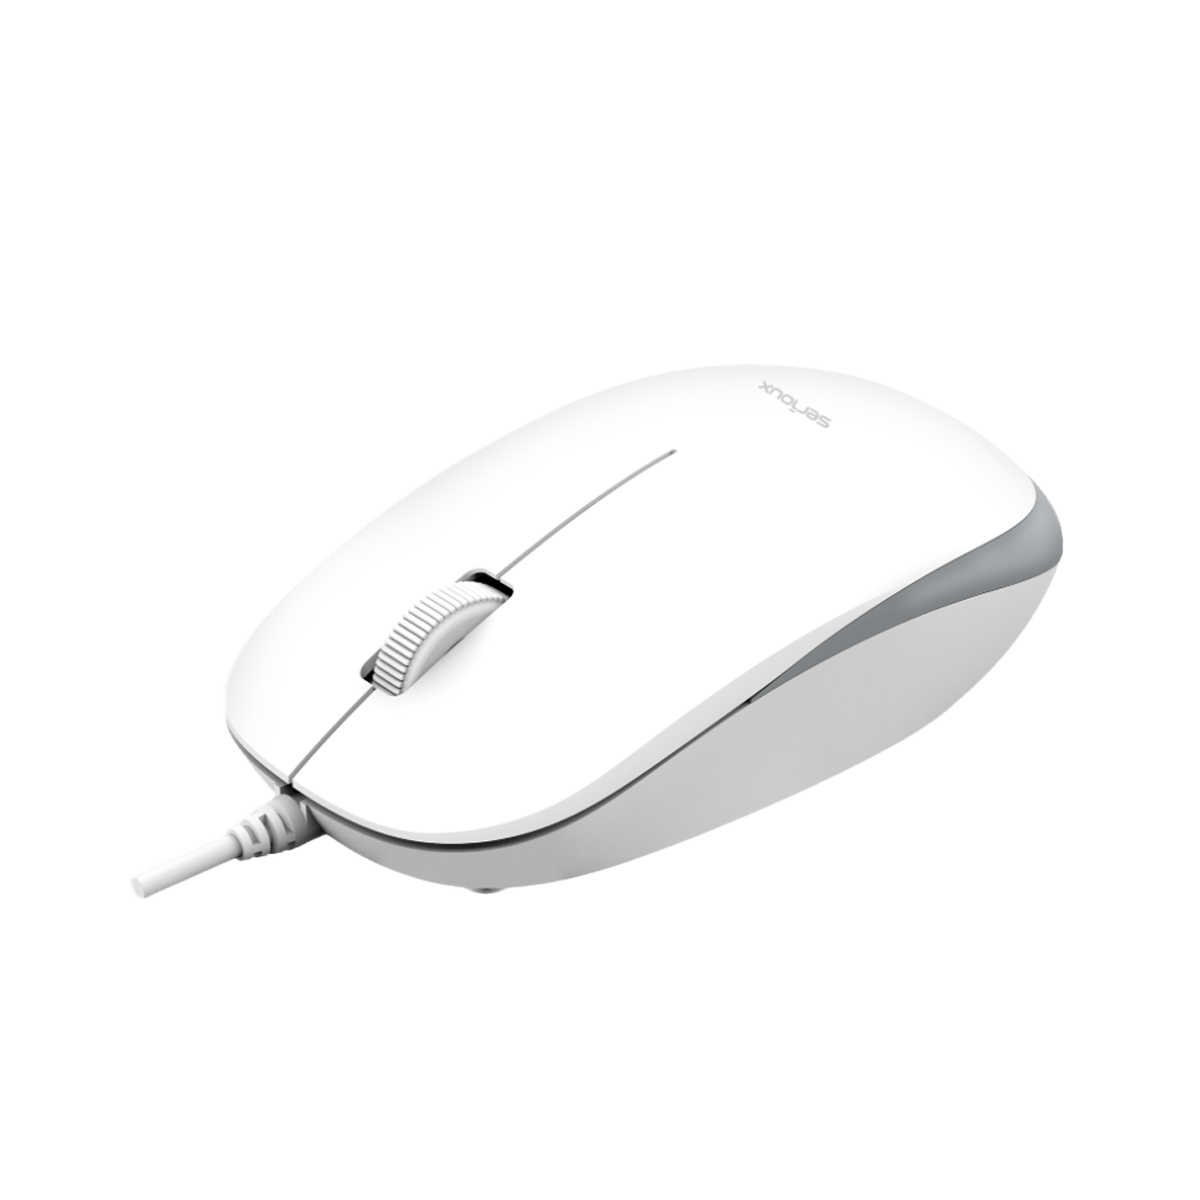 Mouse Optic 9800WHT, 2